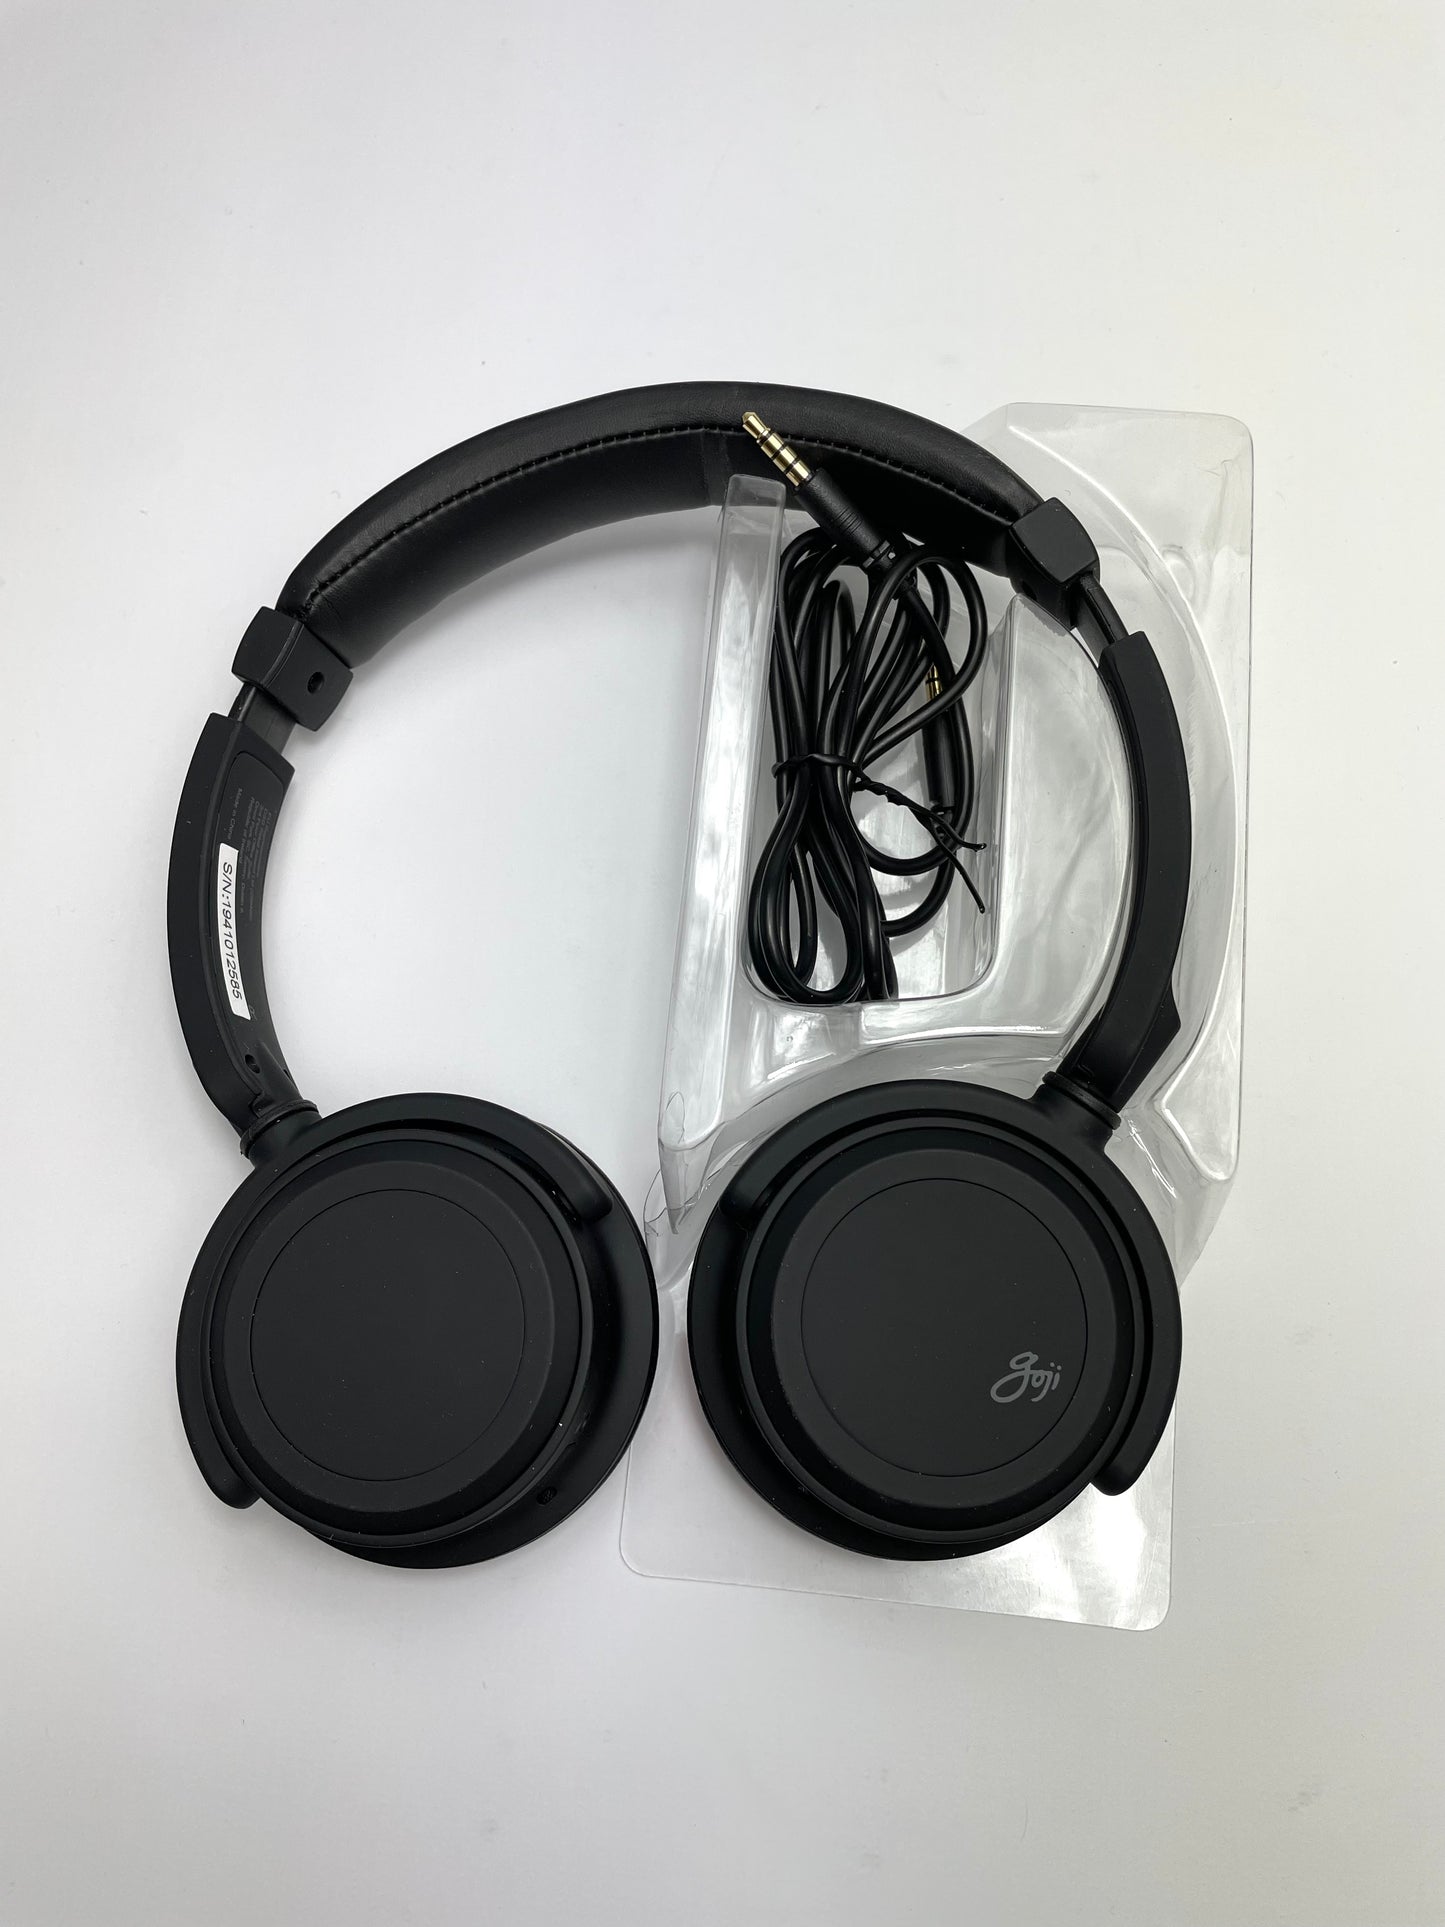 Goji On-Ear Wireless Headphones with Microphone in Black